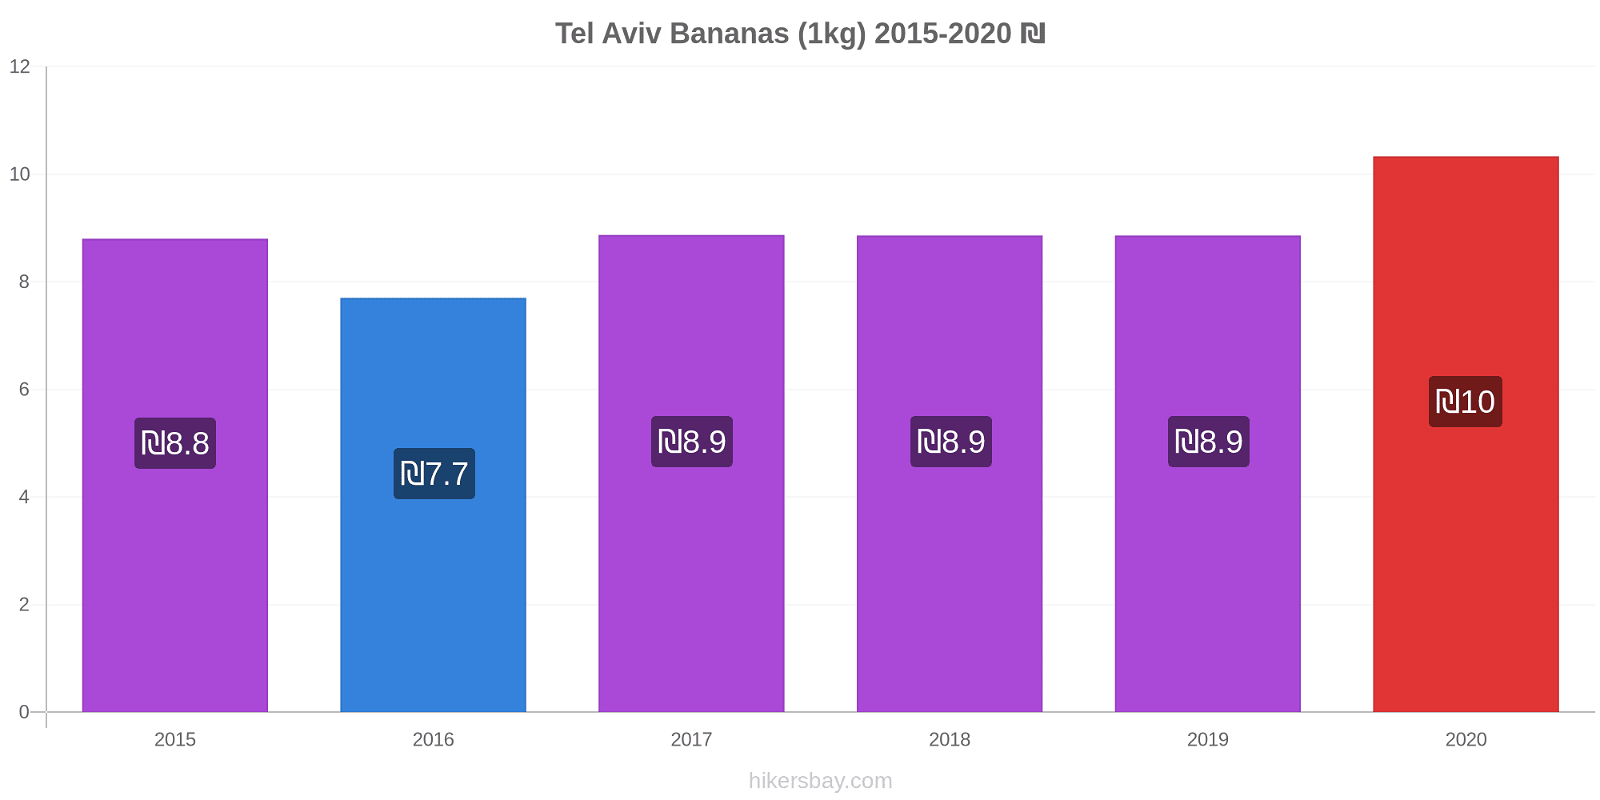 Tel Aviv price changes Bananas (1kg) hikersbay.com